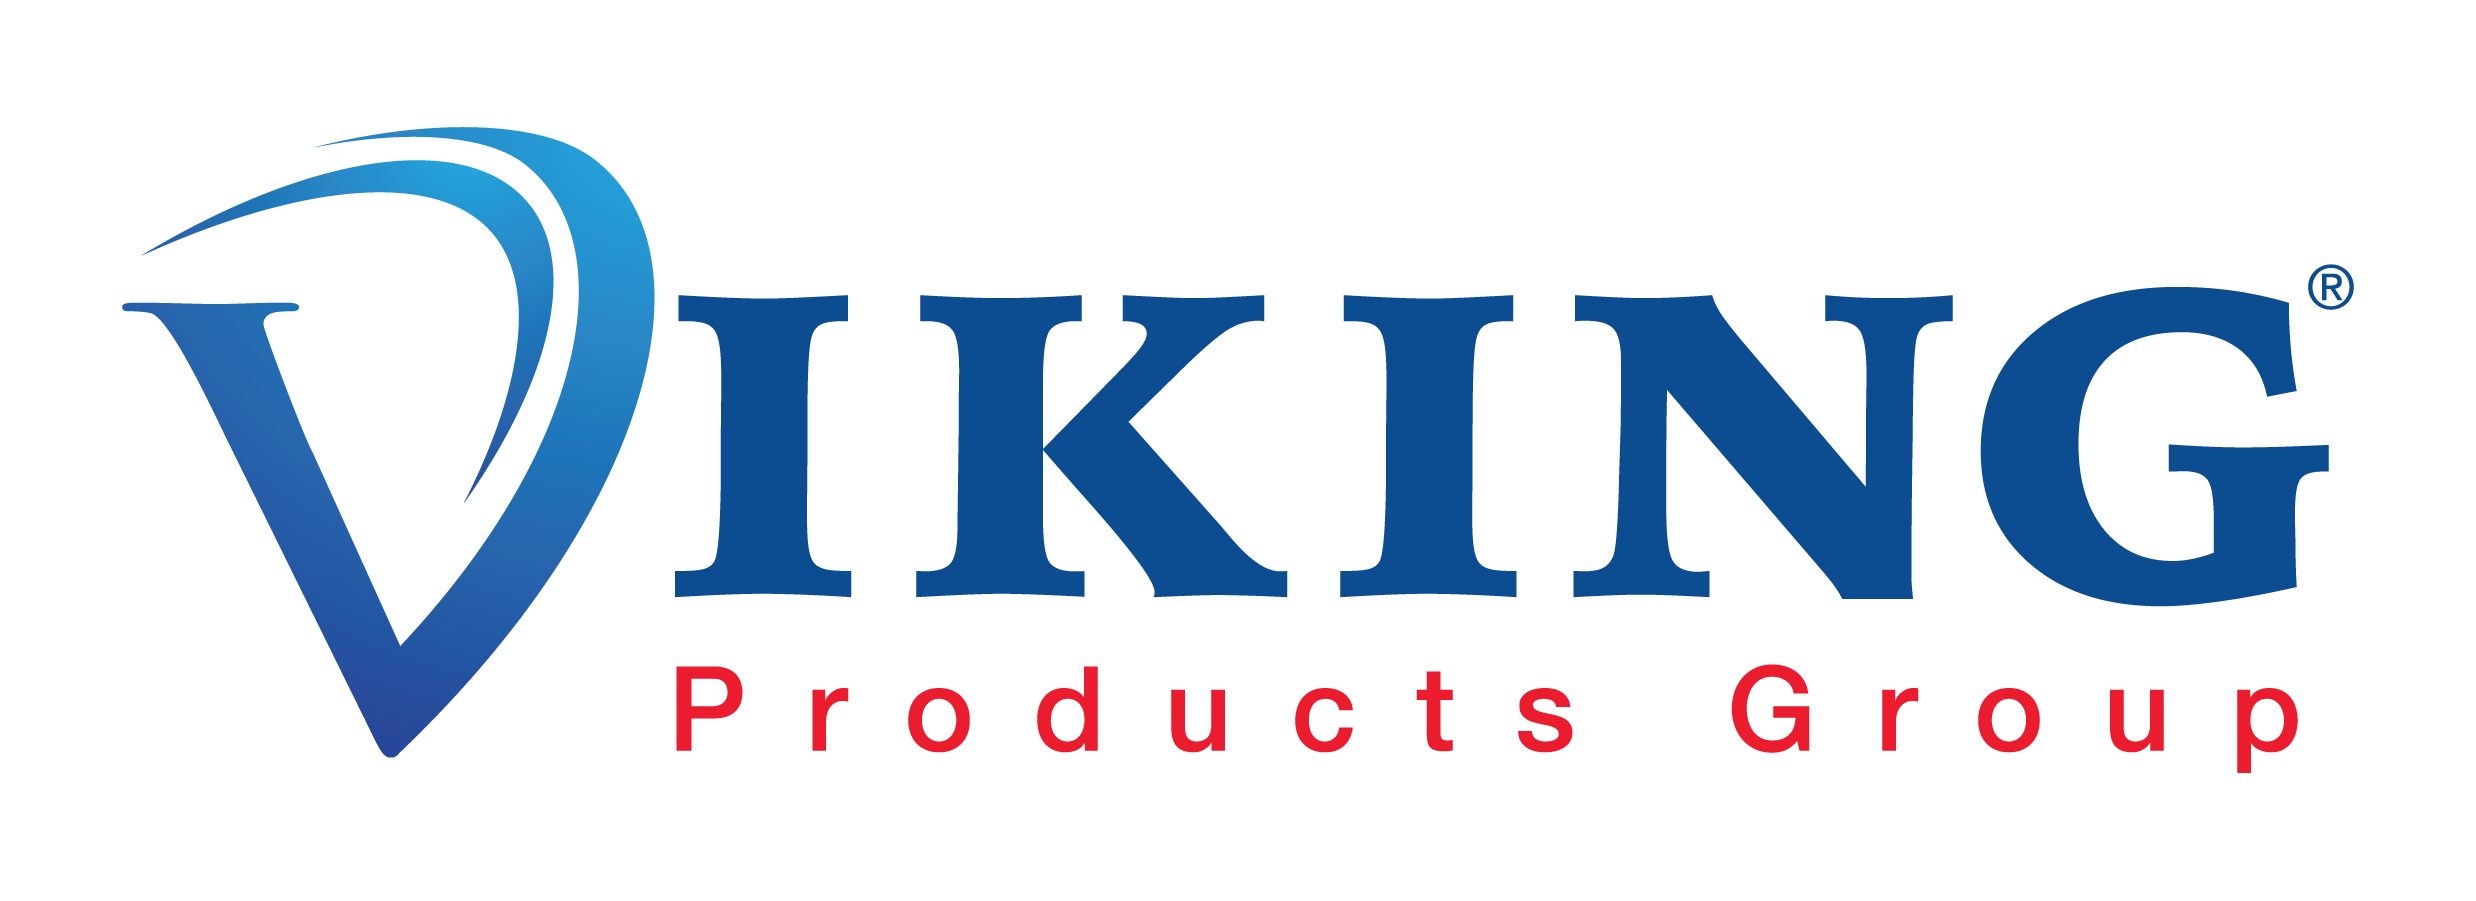 Viking Products Group - Logo